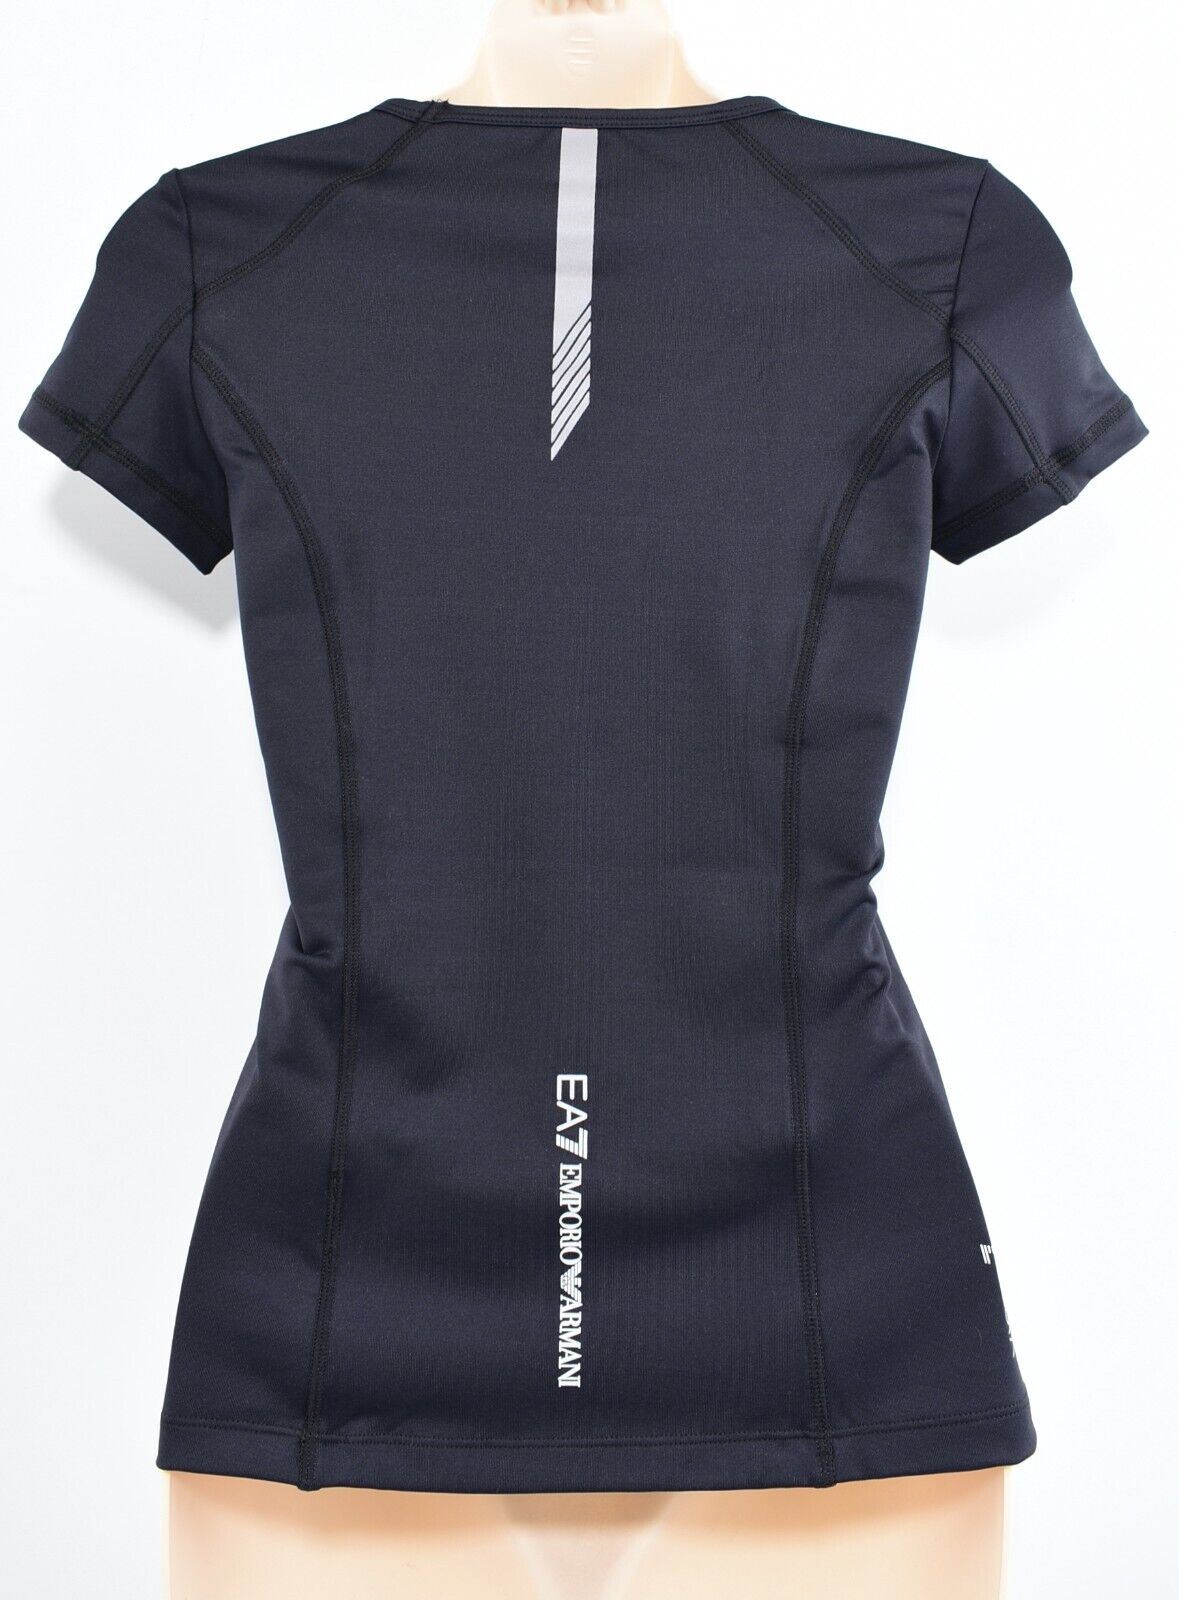 EA7 EMPORIO ARMANI Women's VIGOR Performance T-shirt Tee, Black, size XS /UK 8